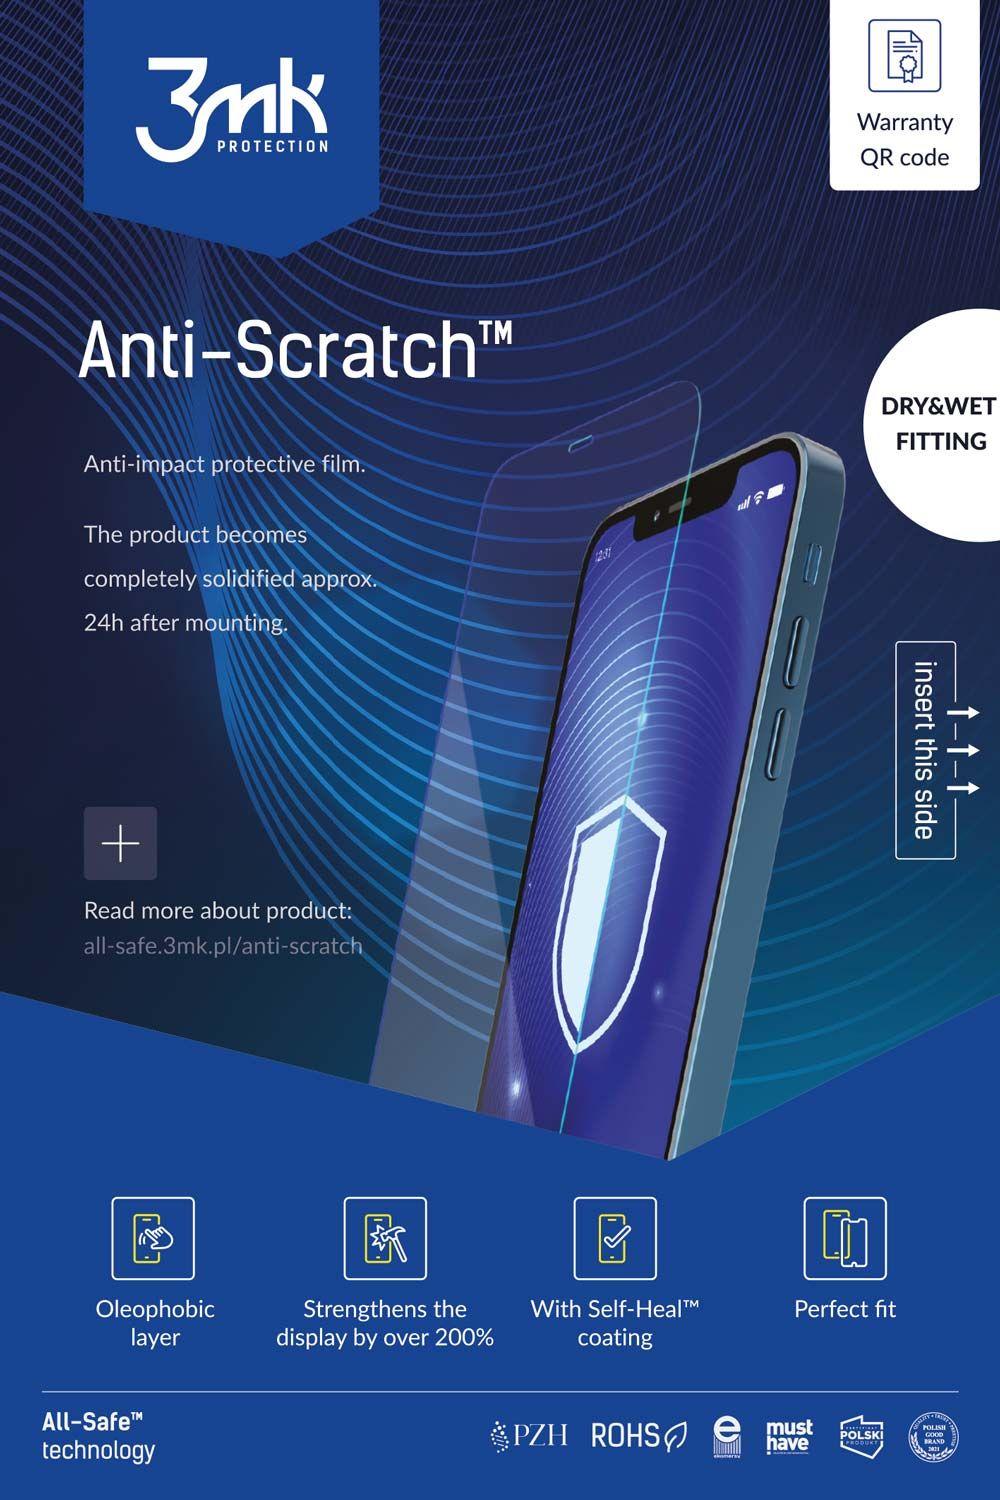 3MK Ochranná fólie All-Safe - AIO Anti-Scratch Phone Dry & Wet Fittting 5ks